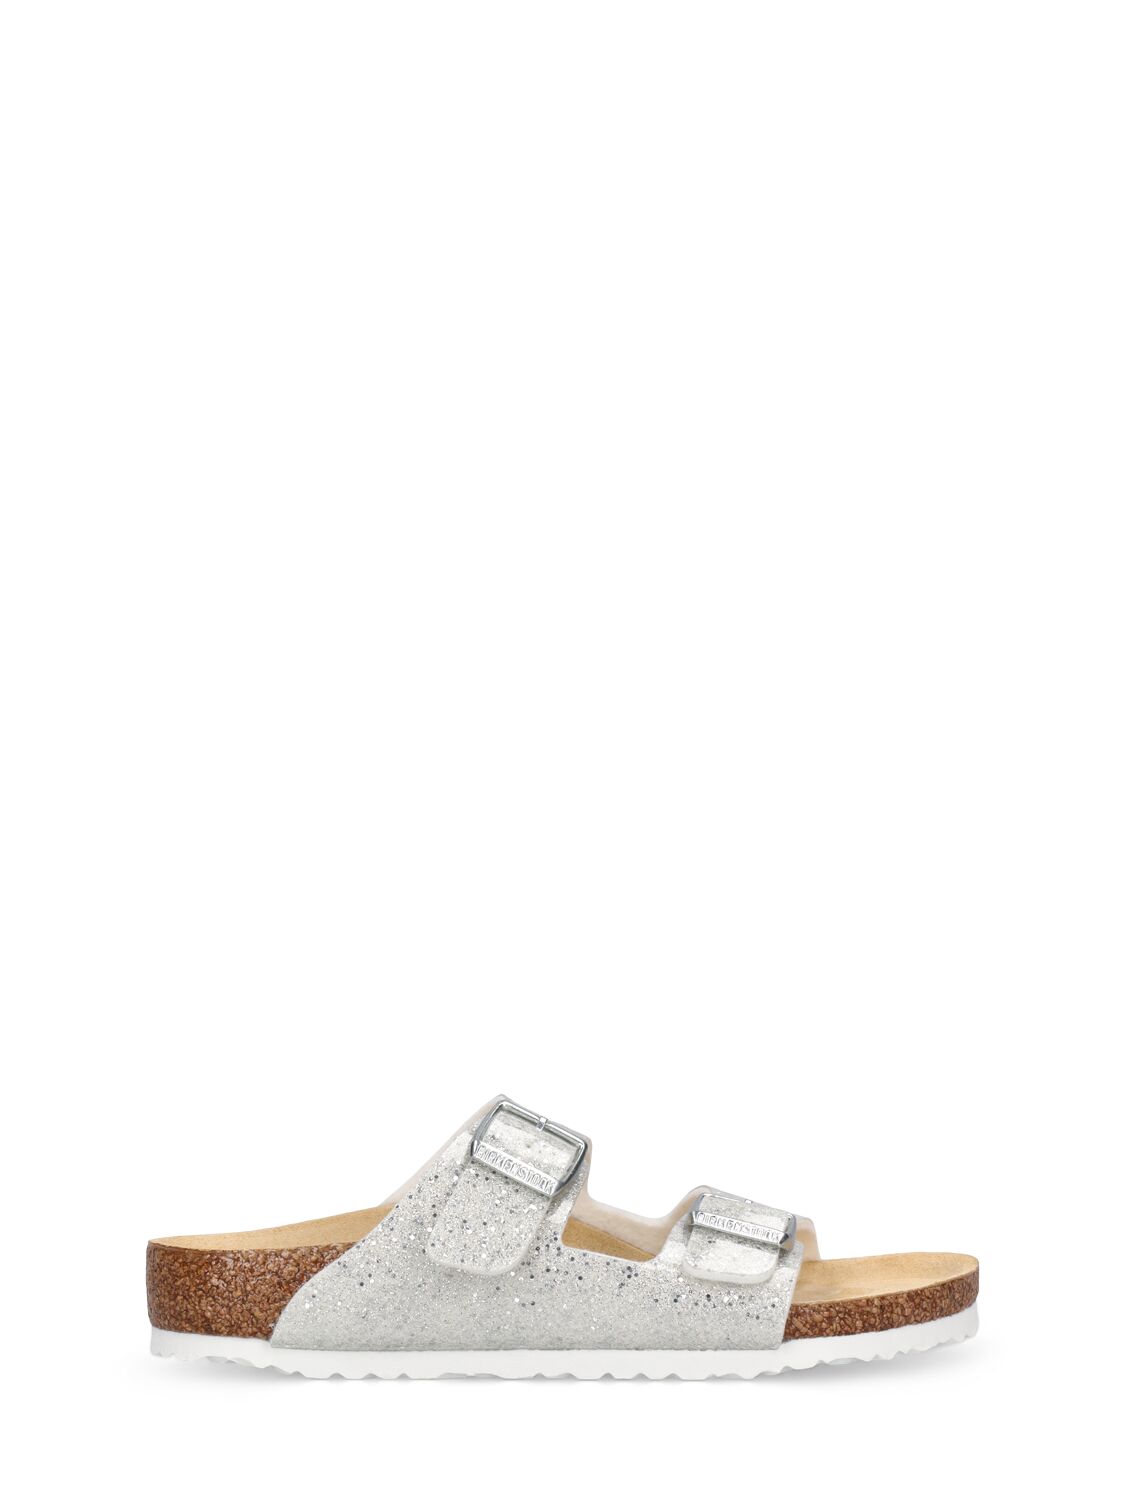 Image of Sparkle Arizona Faux Leather Sandals